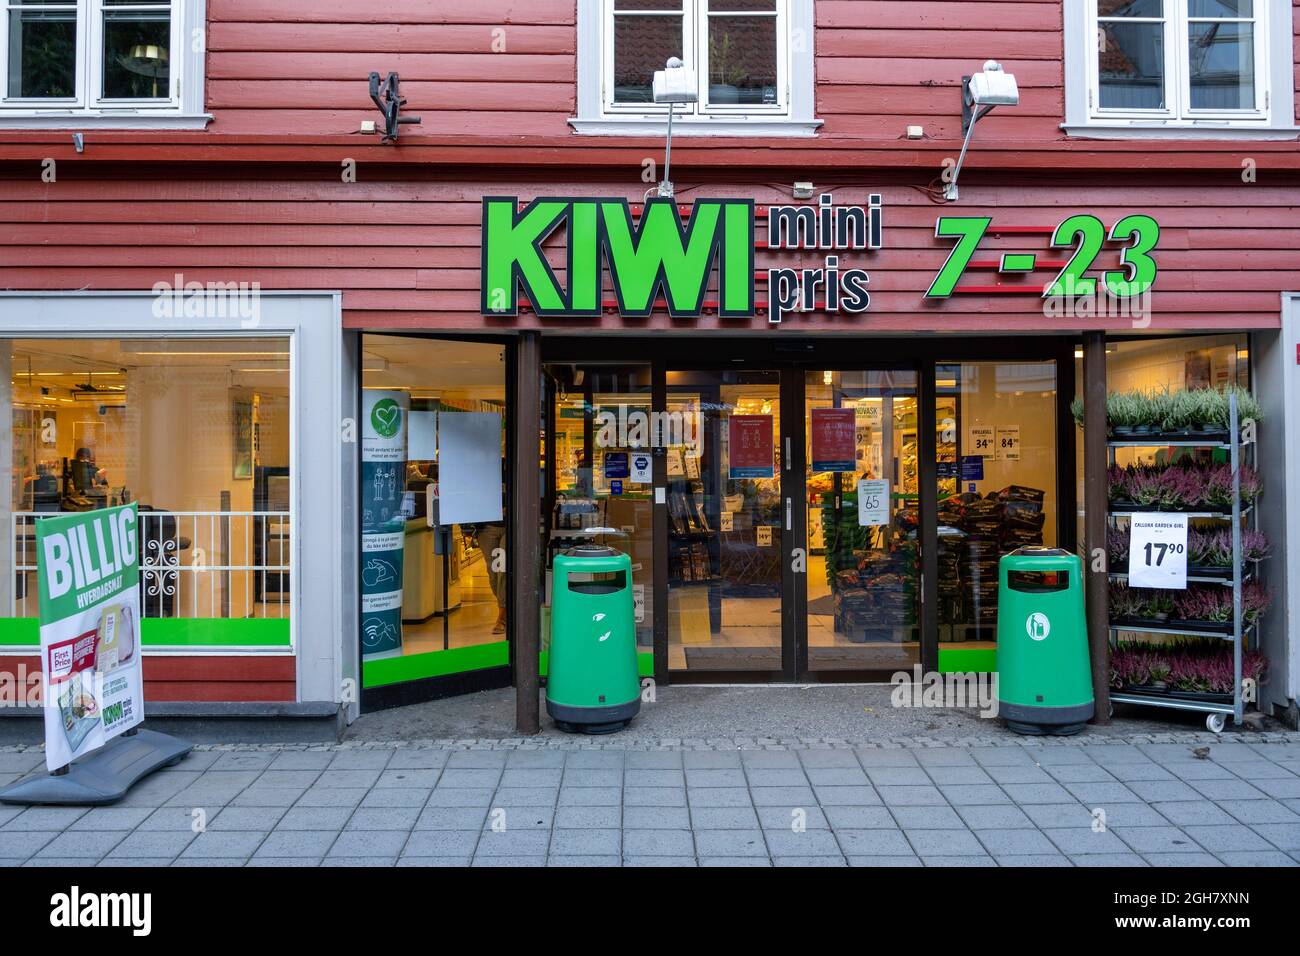 Kiwi Mini Pris in Lillehammer, Europe Stock Photo - Alamy